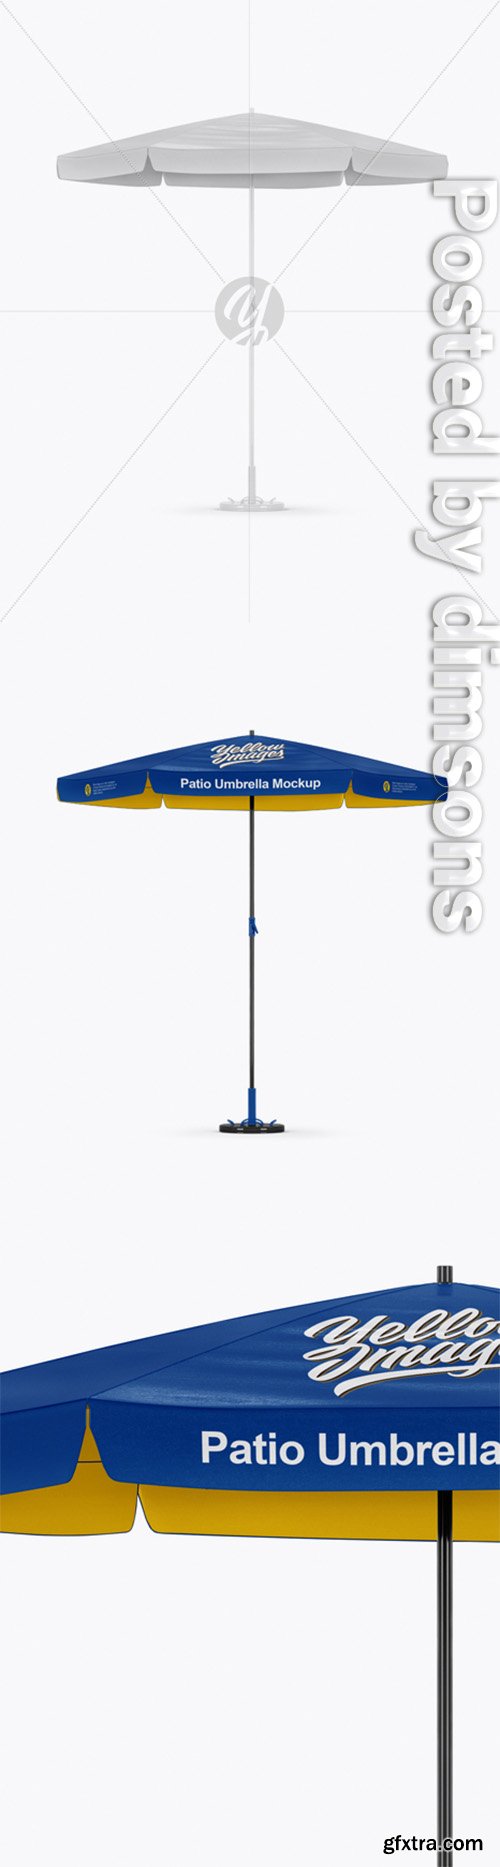 Download Glossy Patio Umbrella Mockup - Front View 30585 » GFxtra